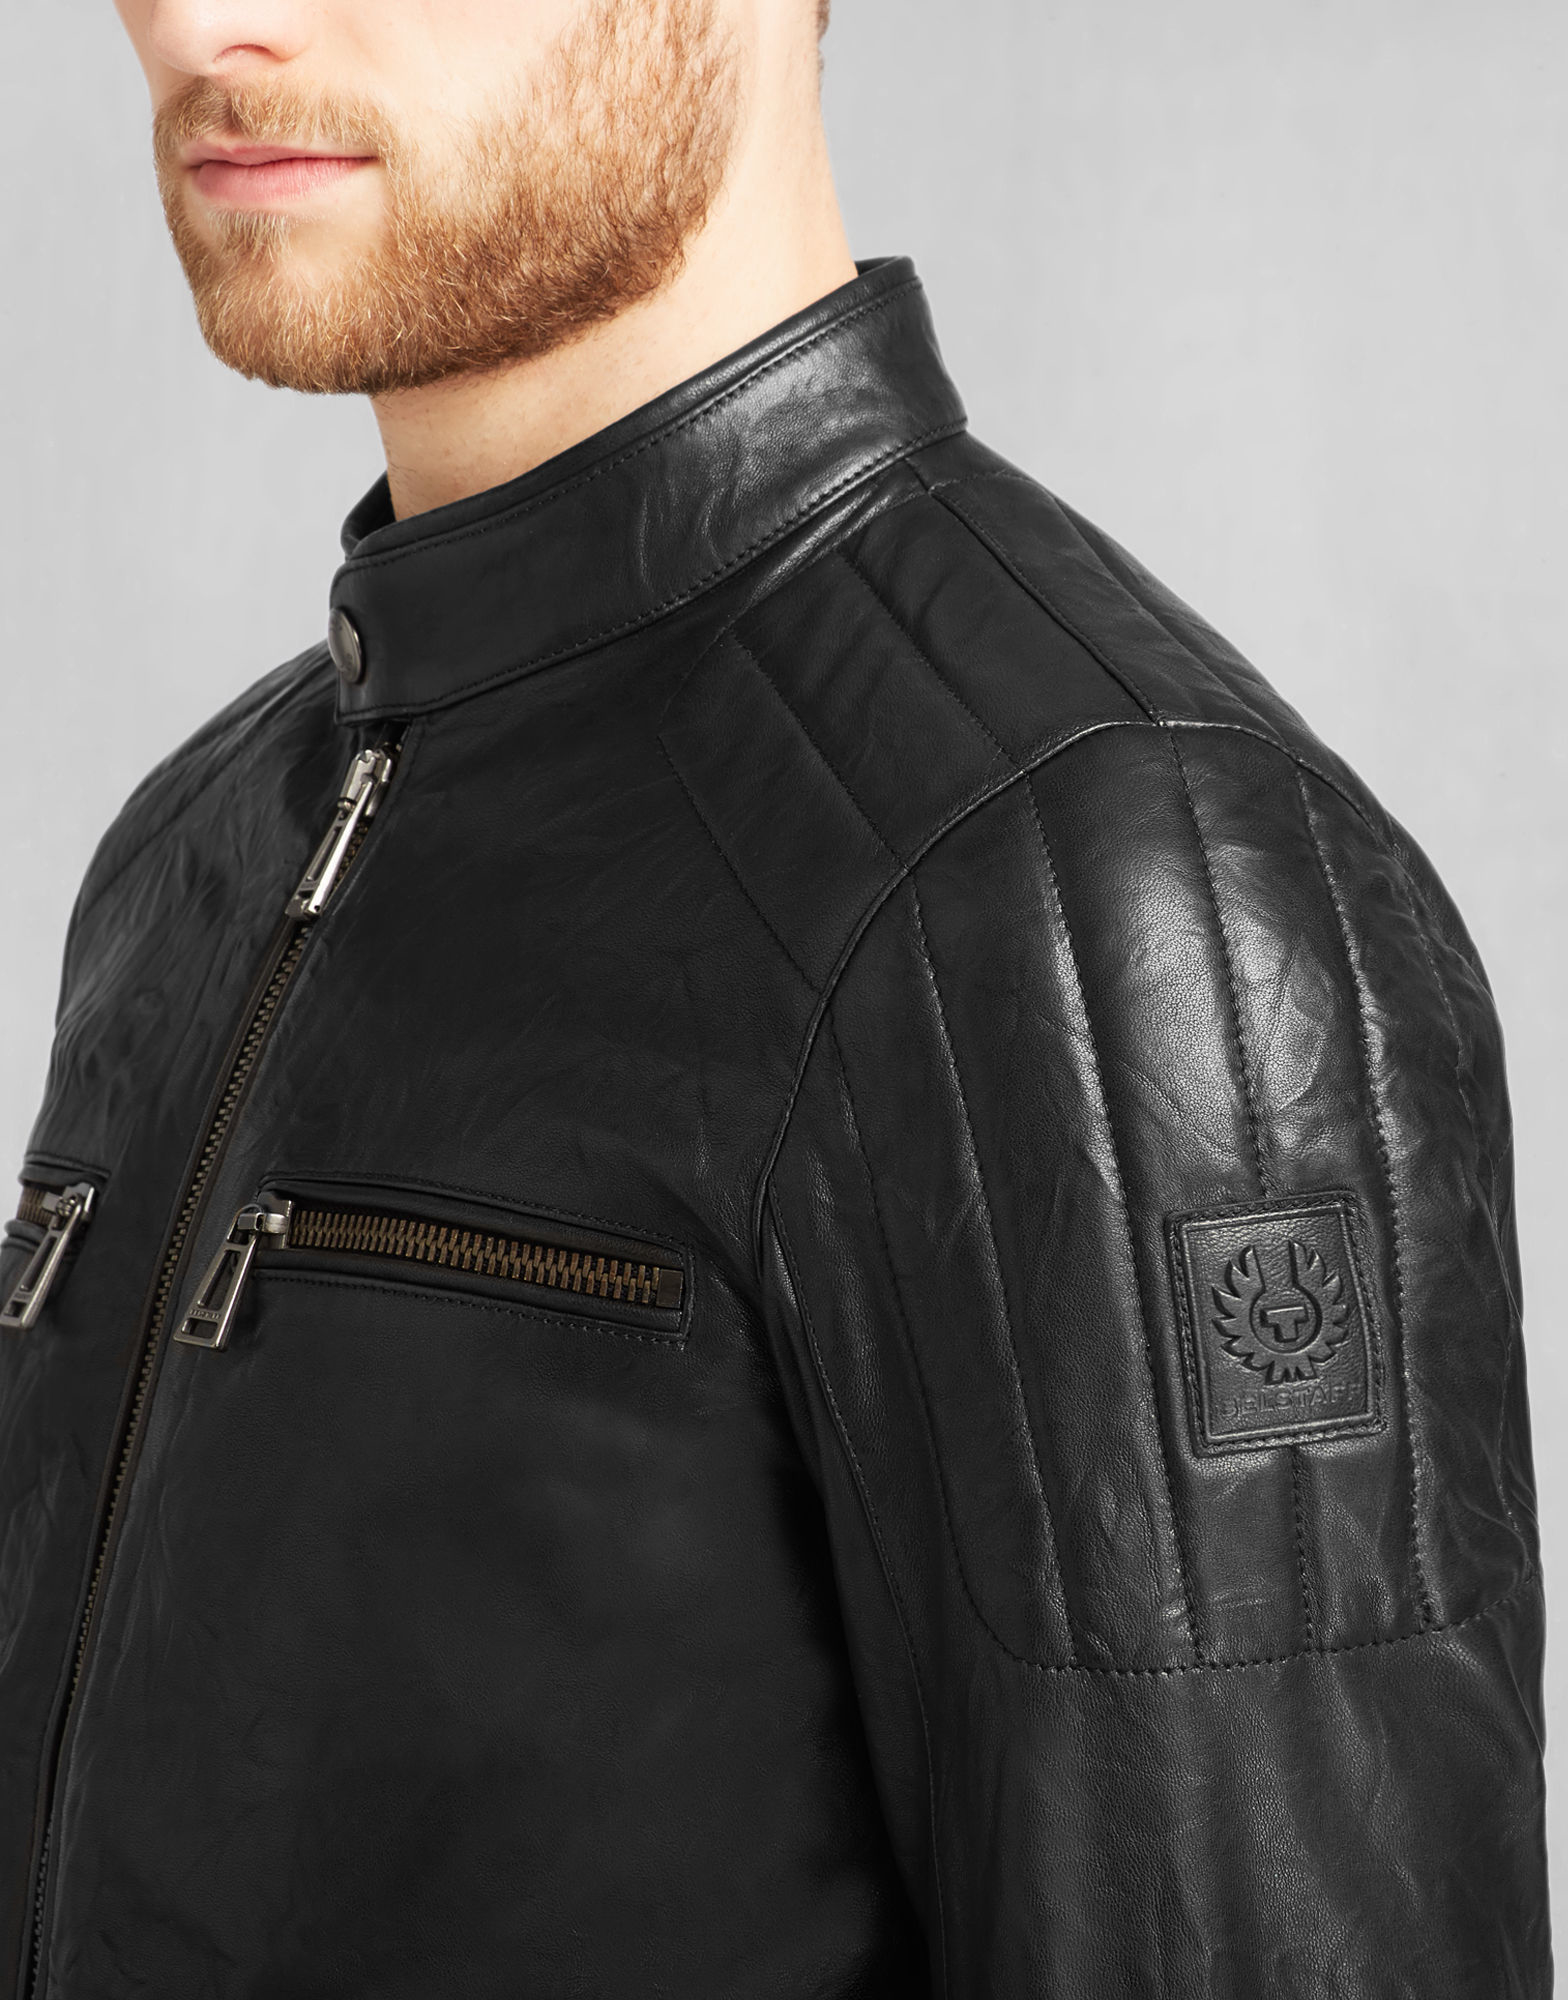 Belstaff Leather Archer Biker Jacket in Black for Men - Lyst